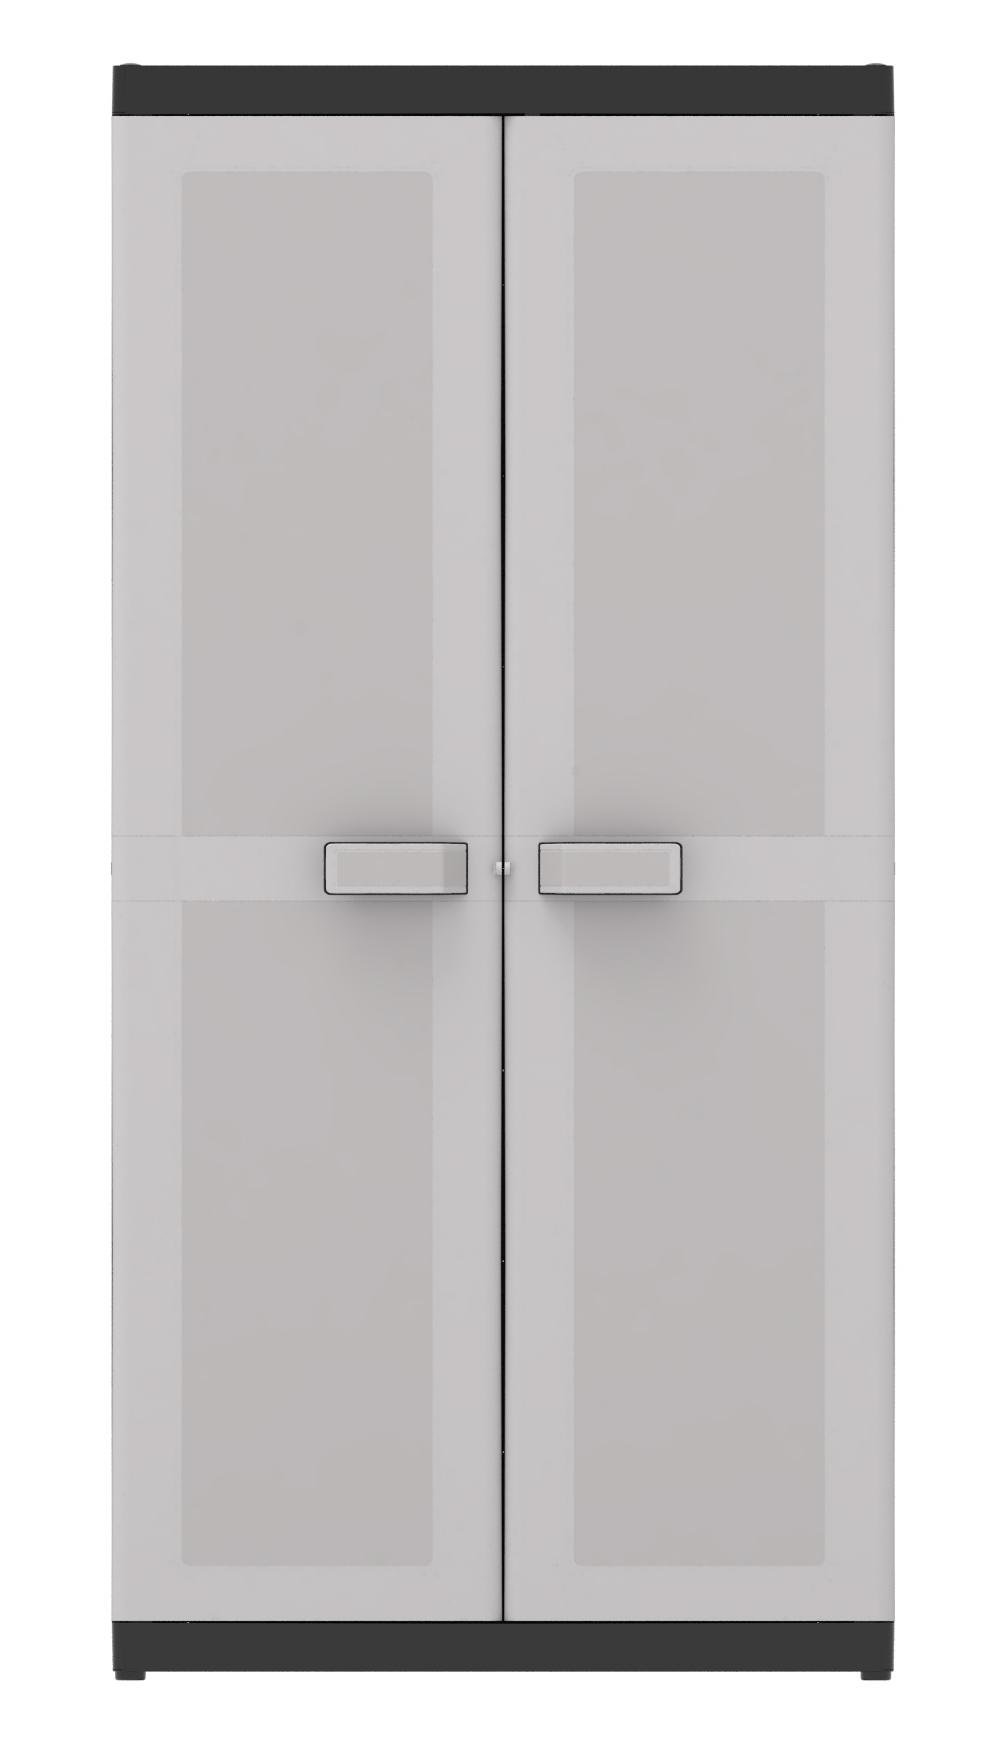   KIS Logico Utility Cabinet XL